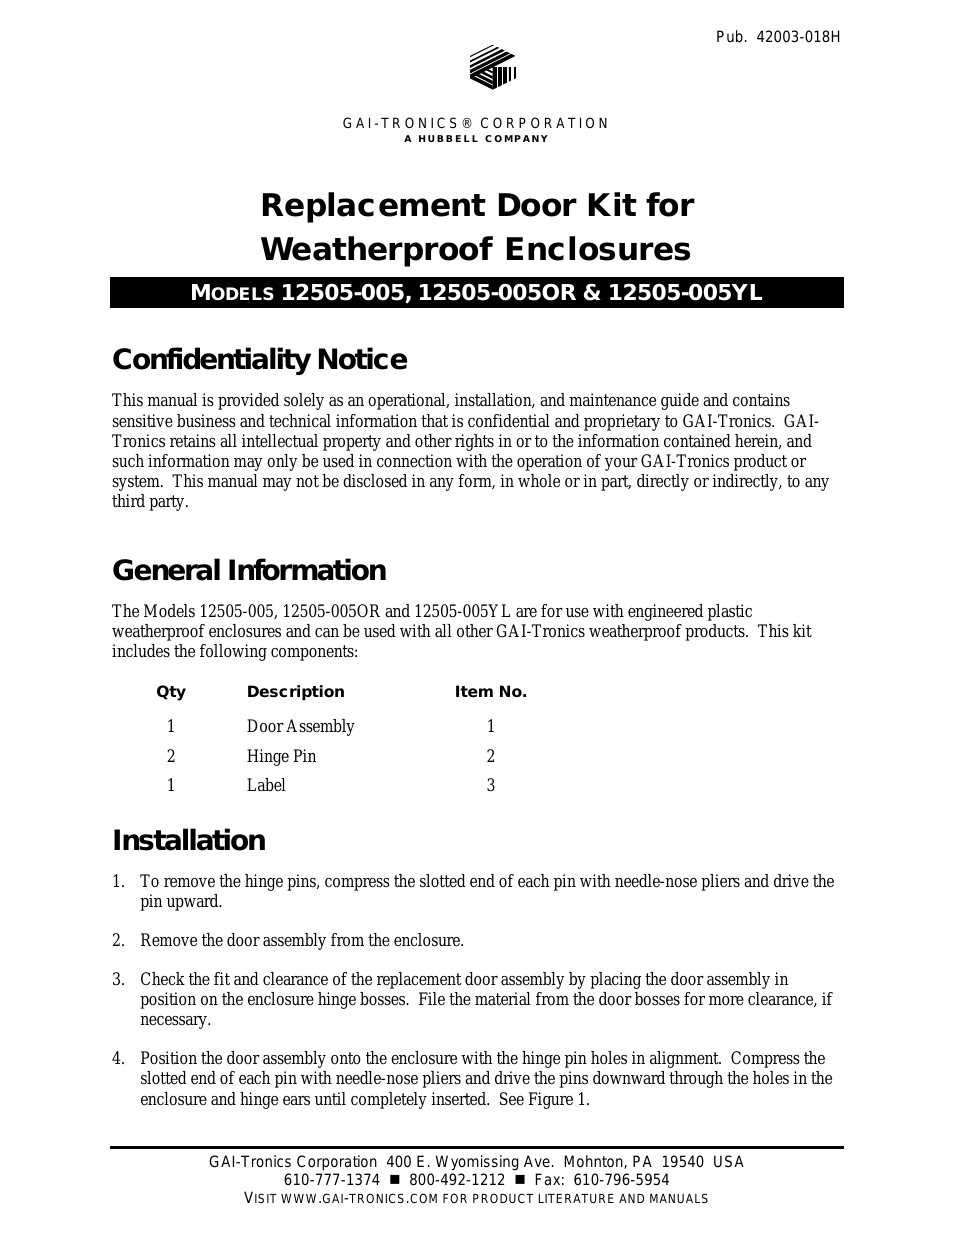 12505-005OR Repl. Door Kit for Weatherproof Enclosure